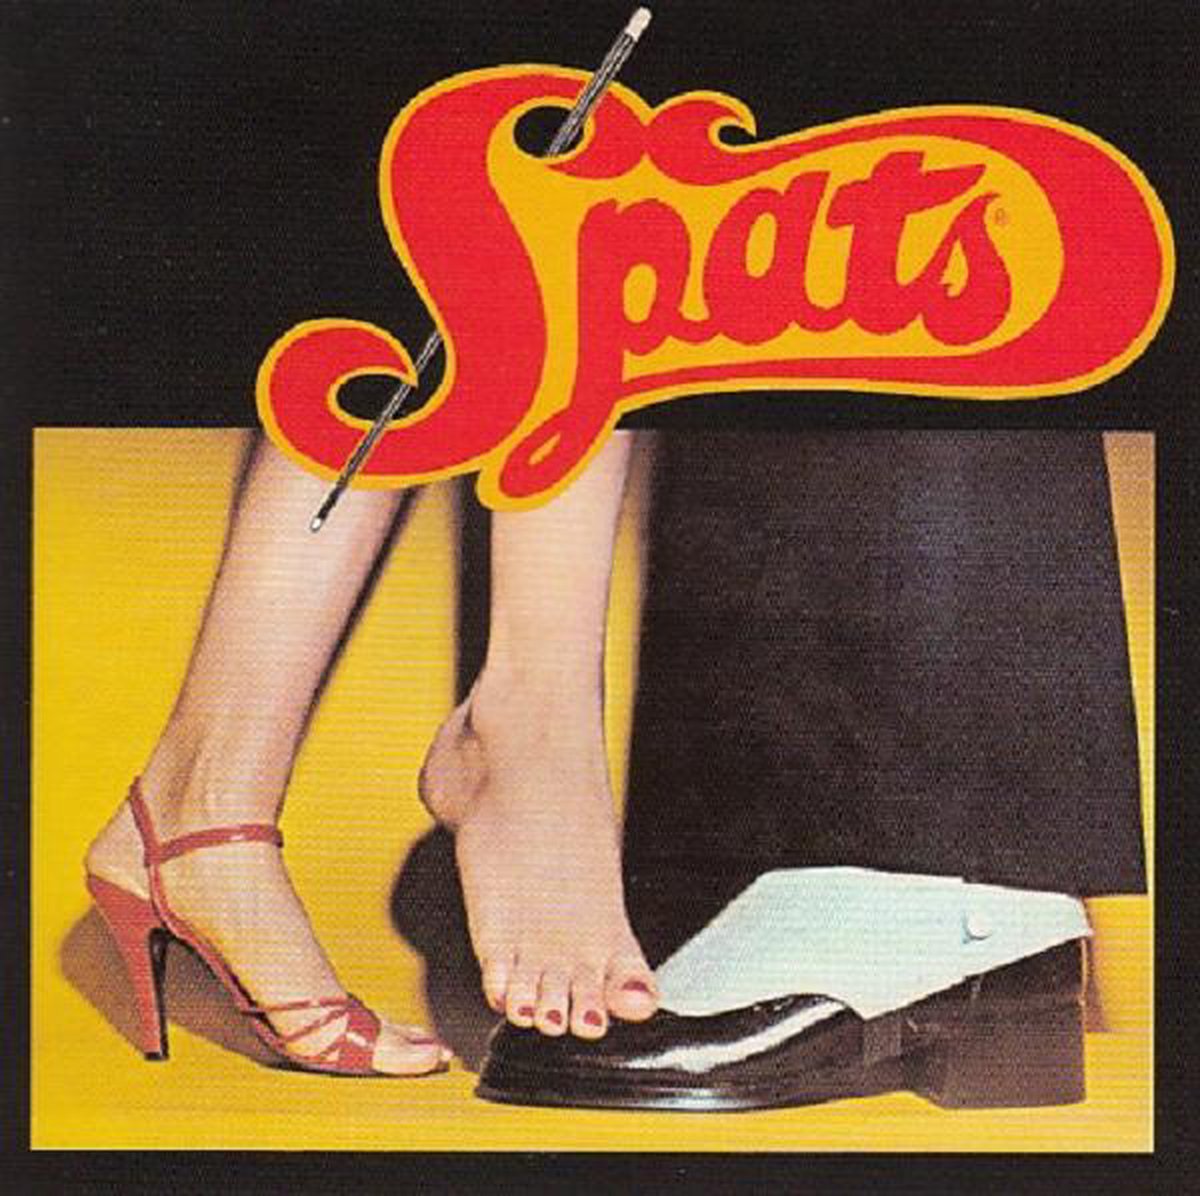 Afbeelding van product spats - spats